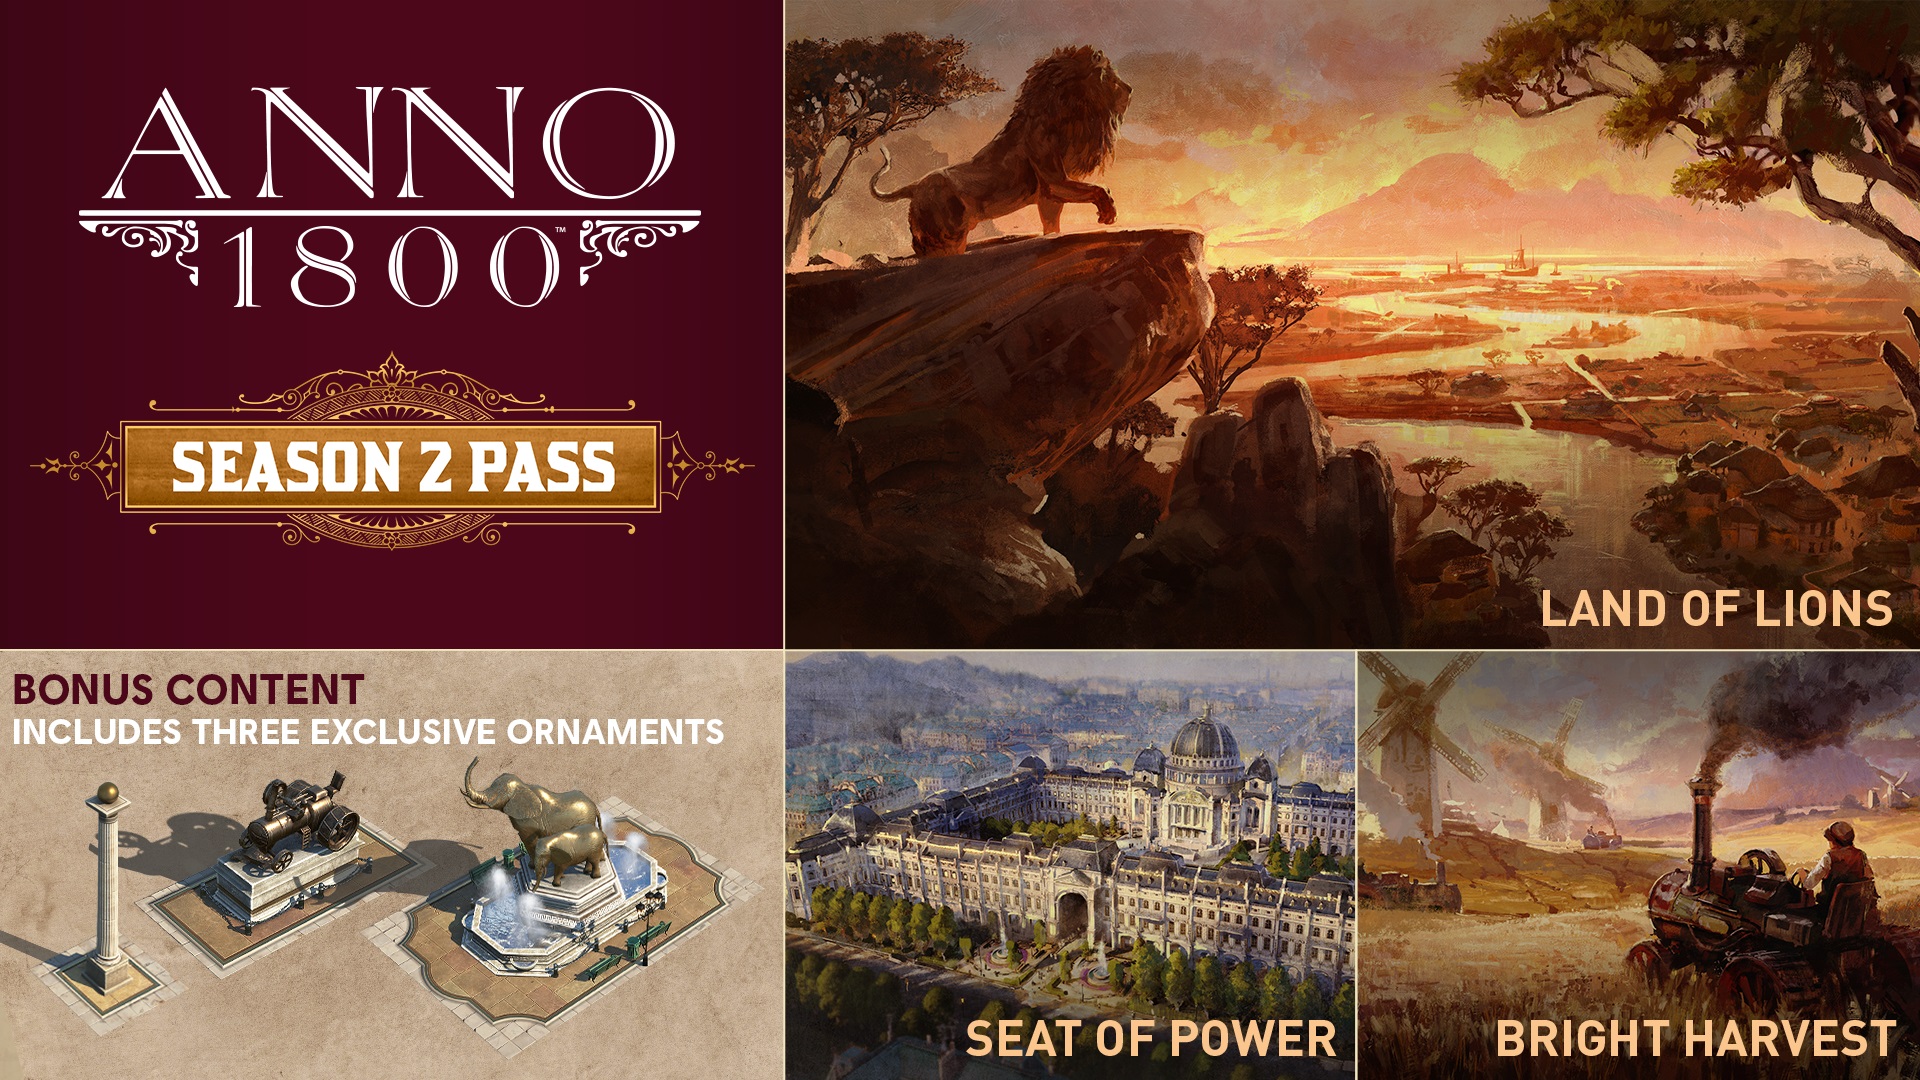 Announcing the Anno 1800 Season 2 Pass